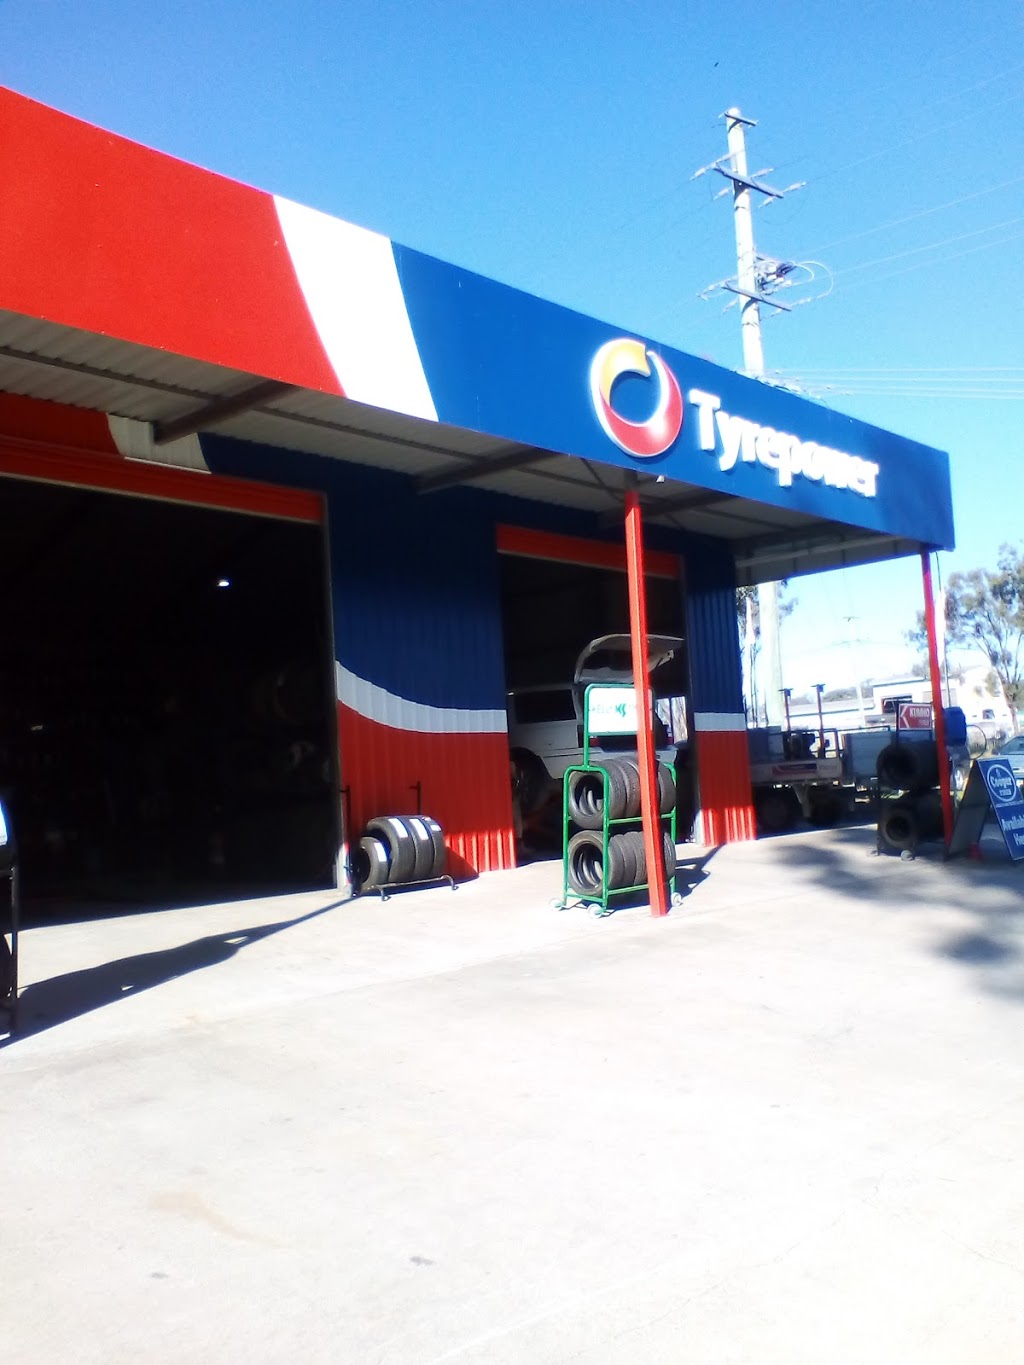 Kilcoy Tyrepower | car repair | 5010 DAguilar Hwy, Winya QLD 4515, Australia | 0754220500 OR +61 7 5422 0500